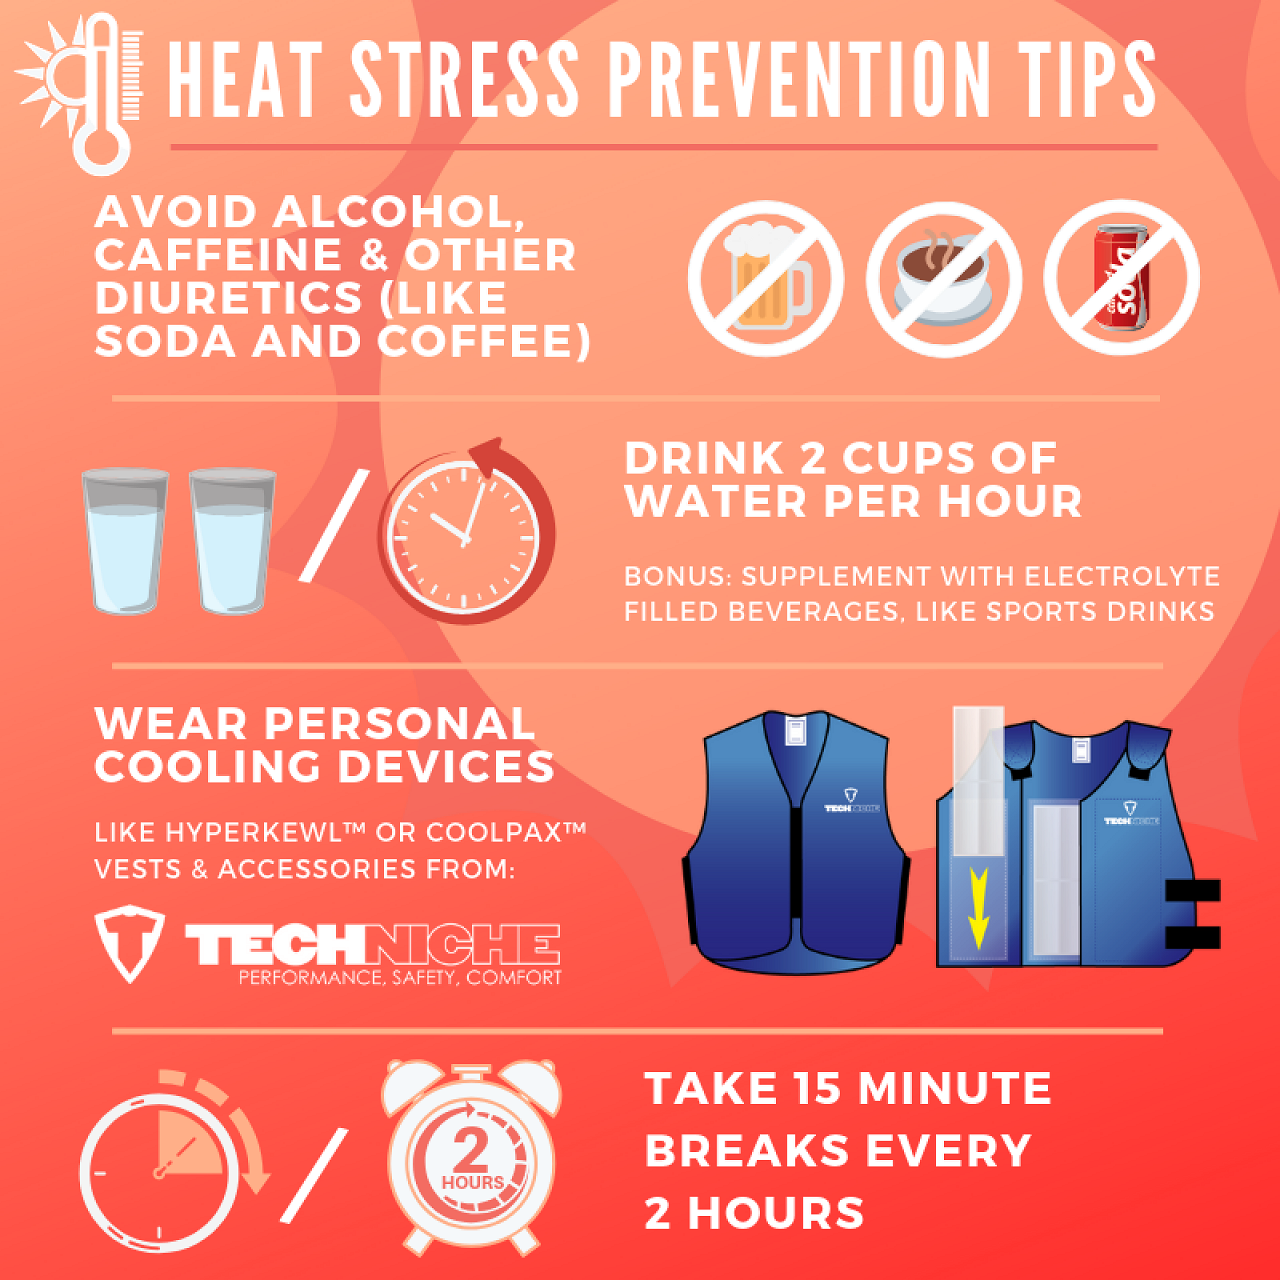 Information on Heat Stress